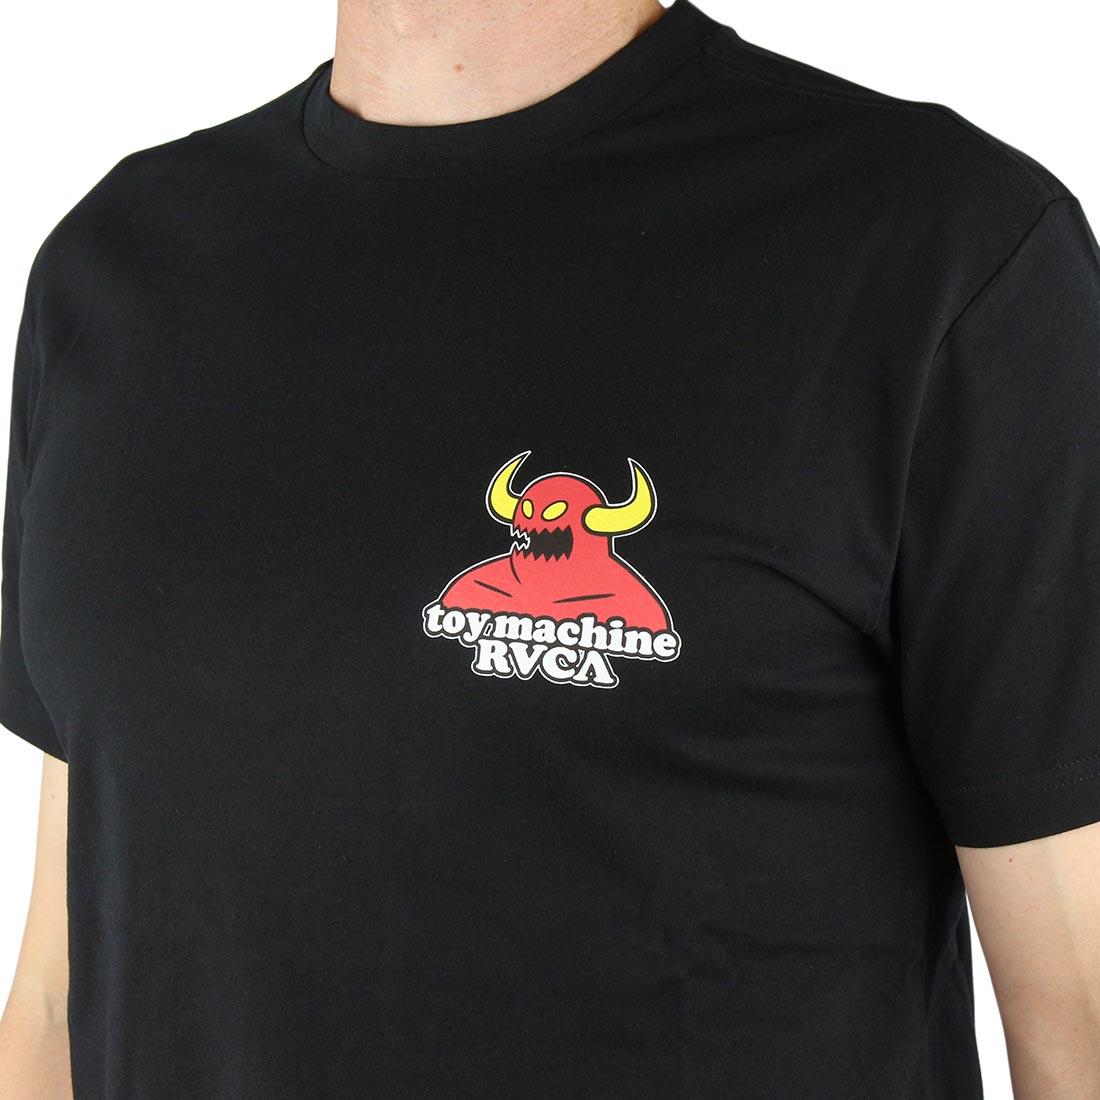 RVCA Small Logo - RVCA x Small Toy Machine S/S T-Shirt - Black